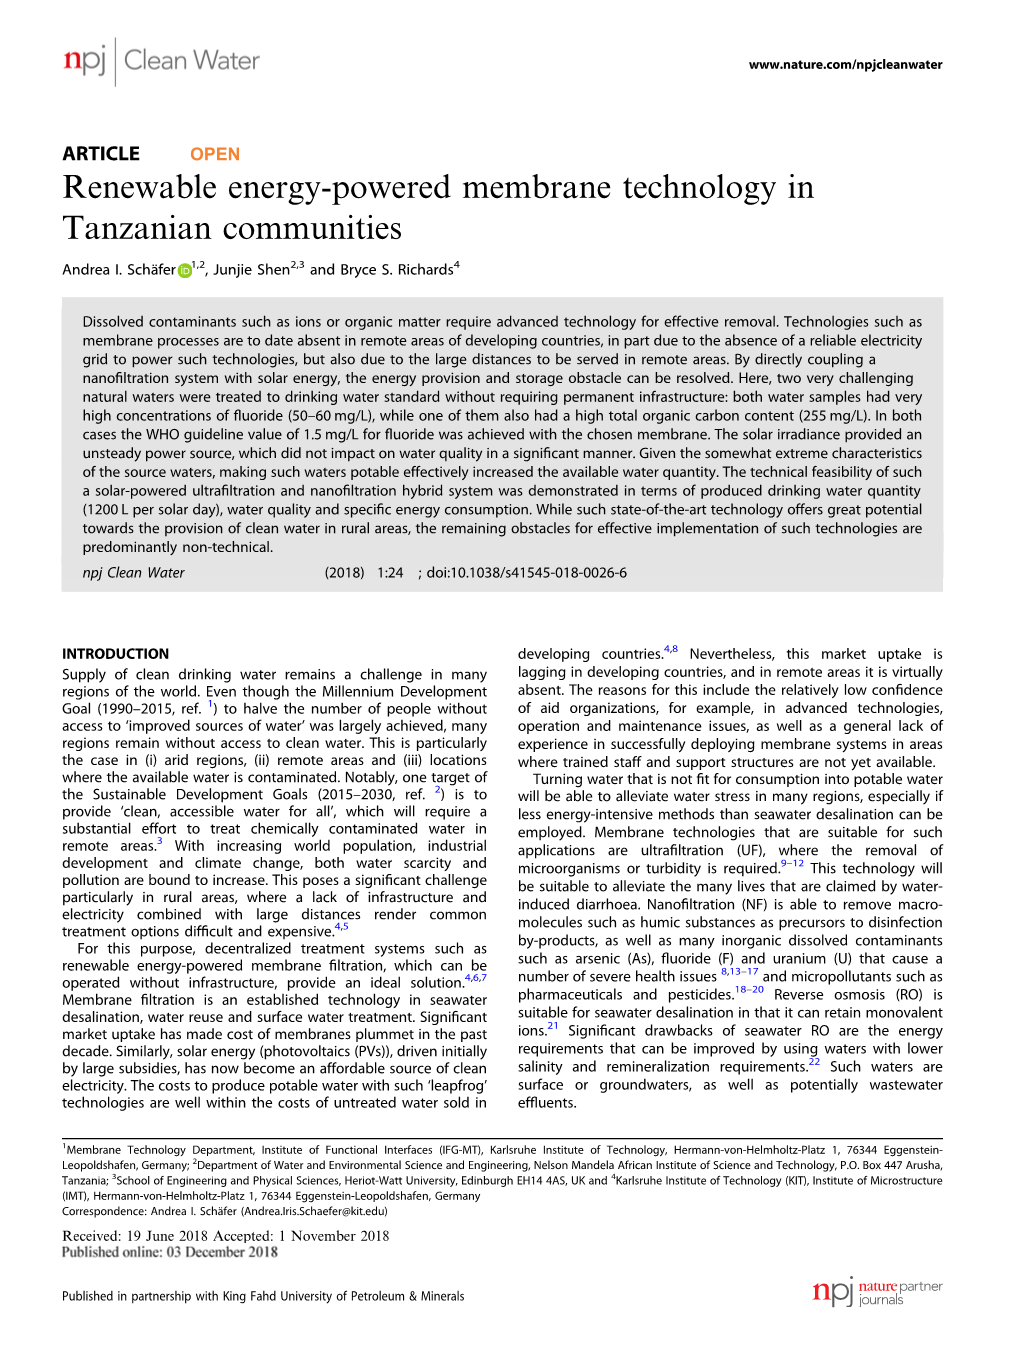 Renewable Energy-Powered Membrane Technology in Tanzanian Communities